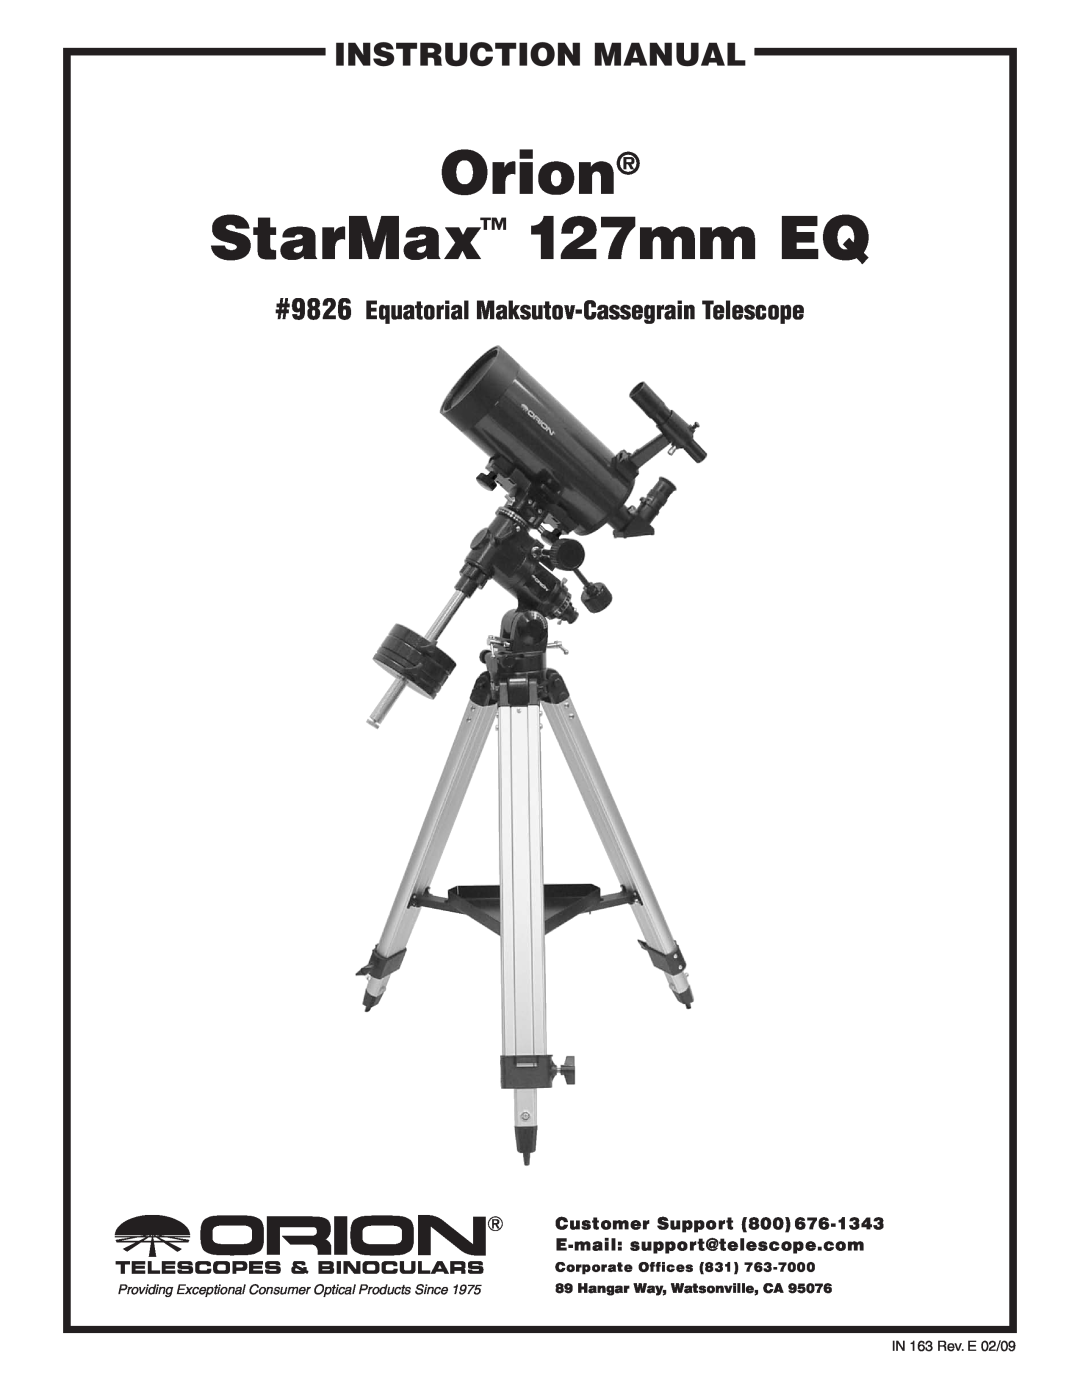 Orion instruction manual #9826 Equatorial Maksutov-Cassegrain Telescope, Customer Support 800, Orion StarMax 127mm EQ 